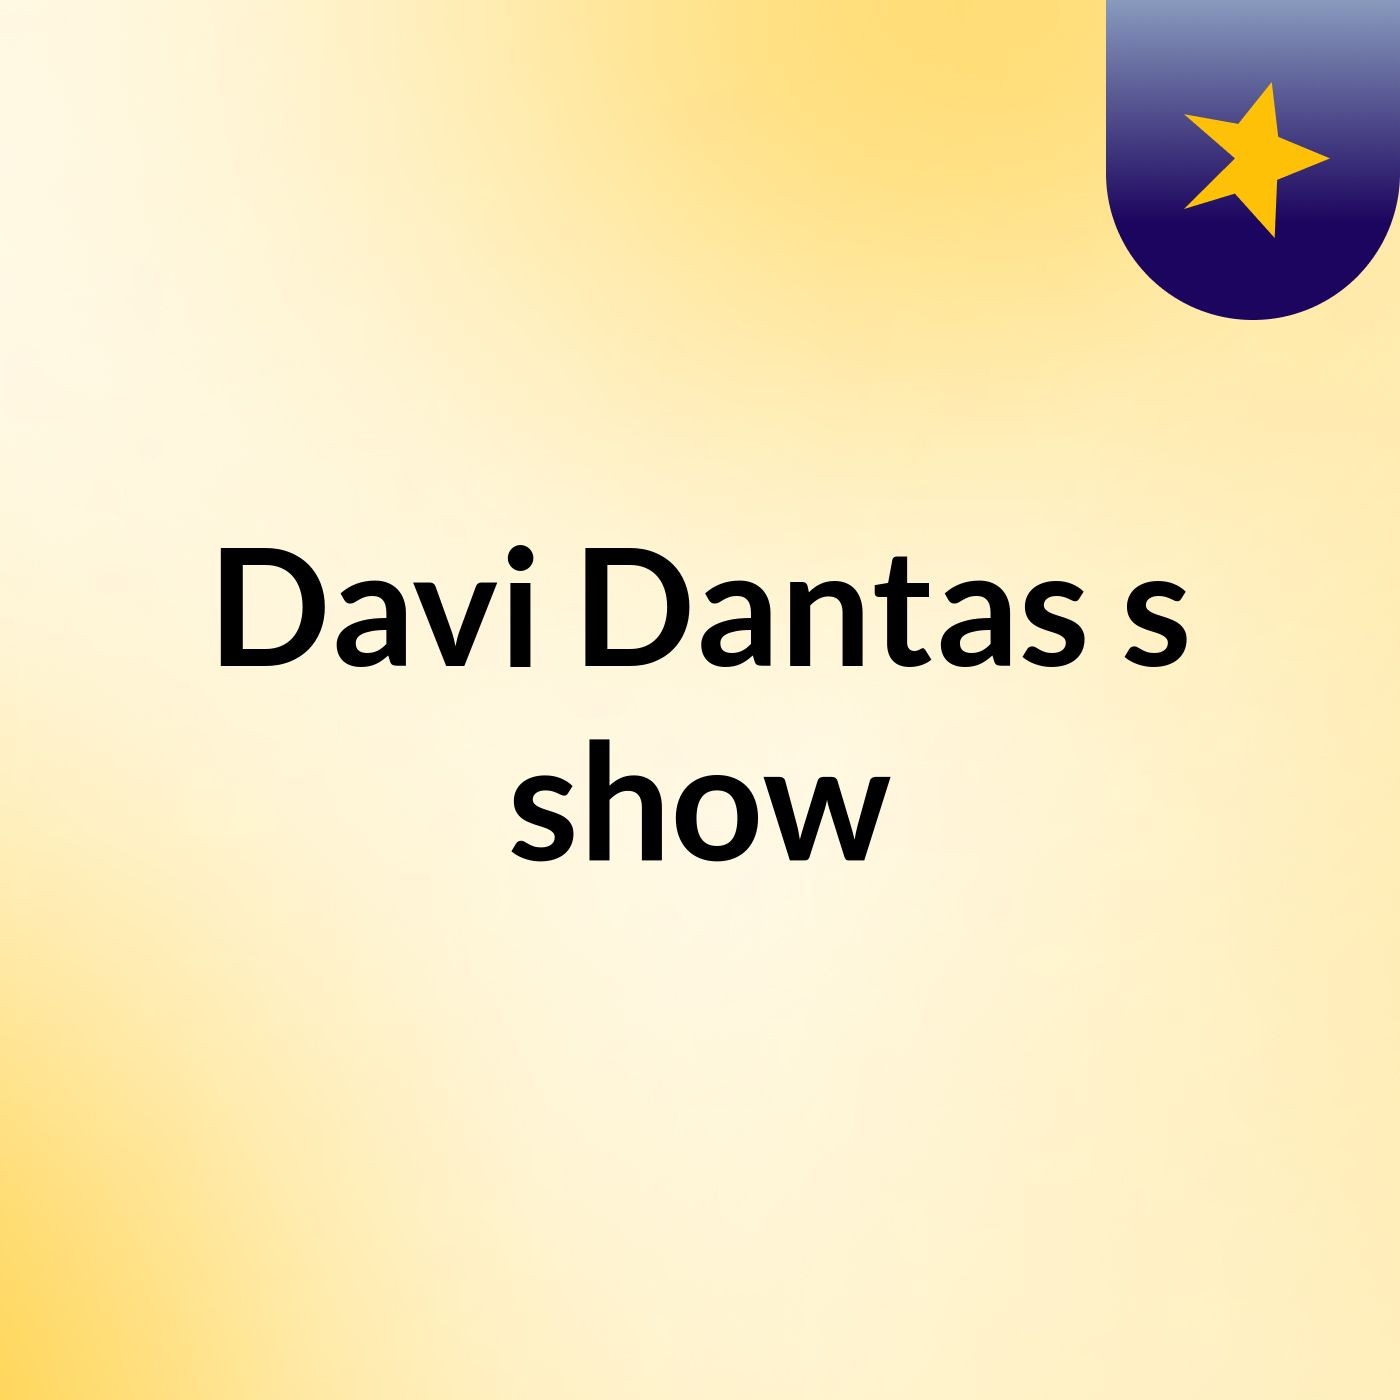 Davi Dantas's show